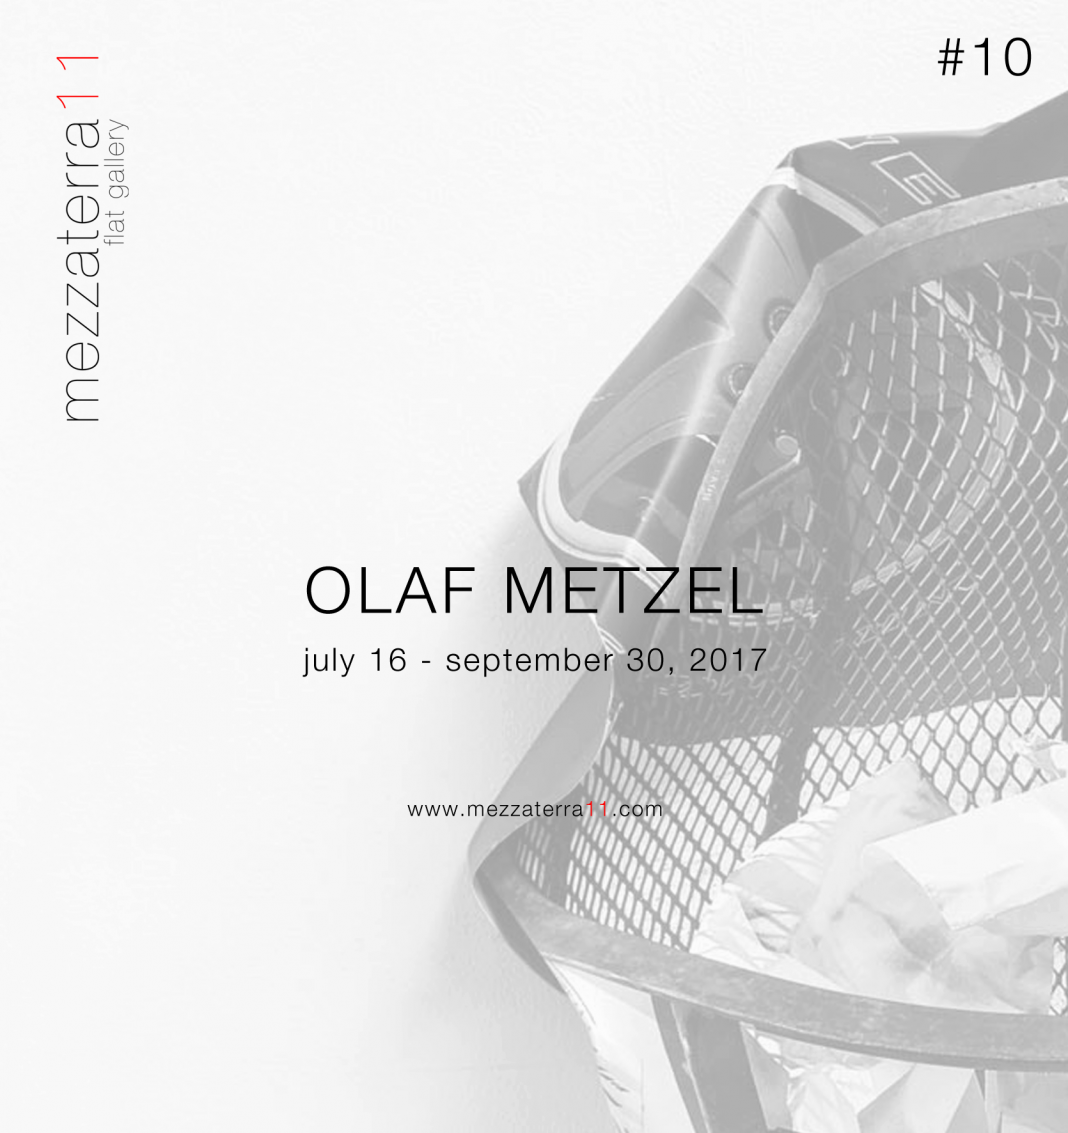 #10 Olaf Metzelhttps://www.exibart.com/repository/media/eventi/2017/07/10-olaf-metzel-1068x1133.png